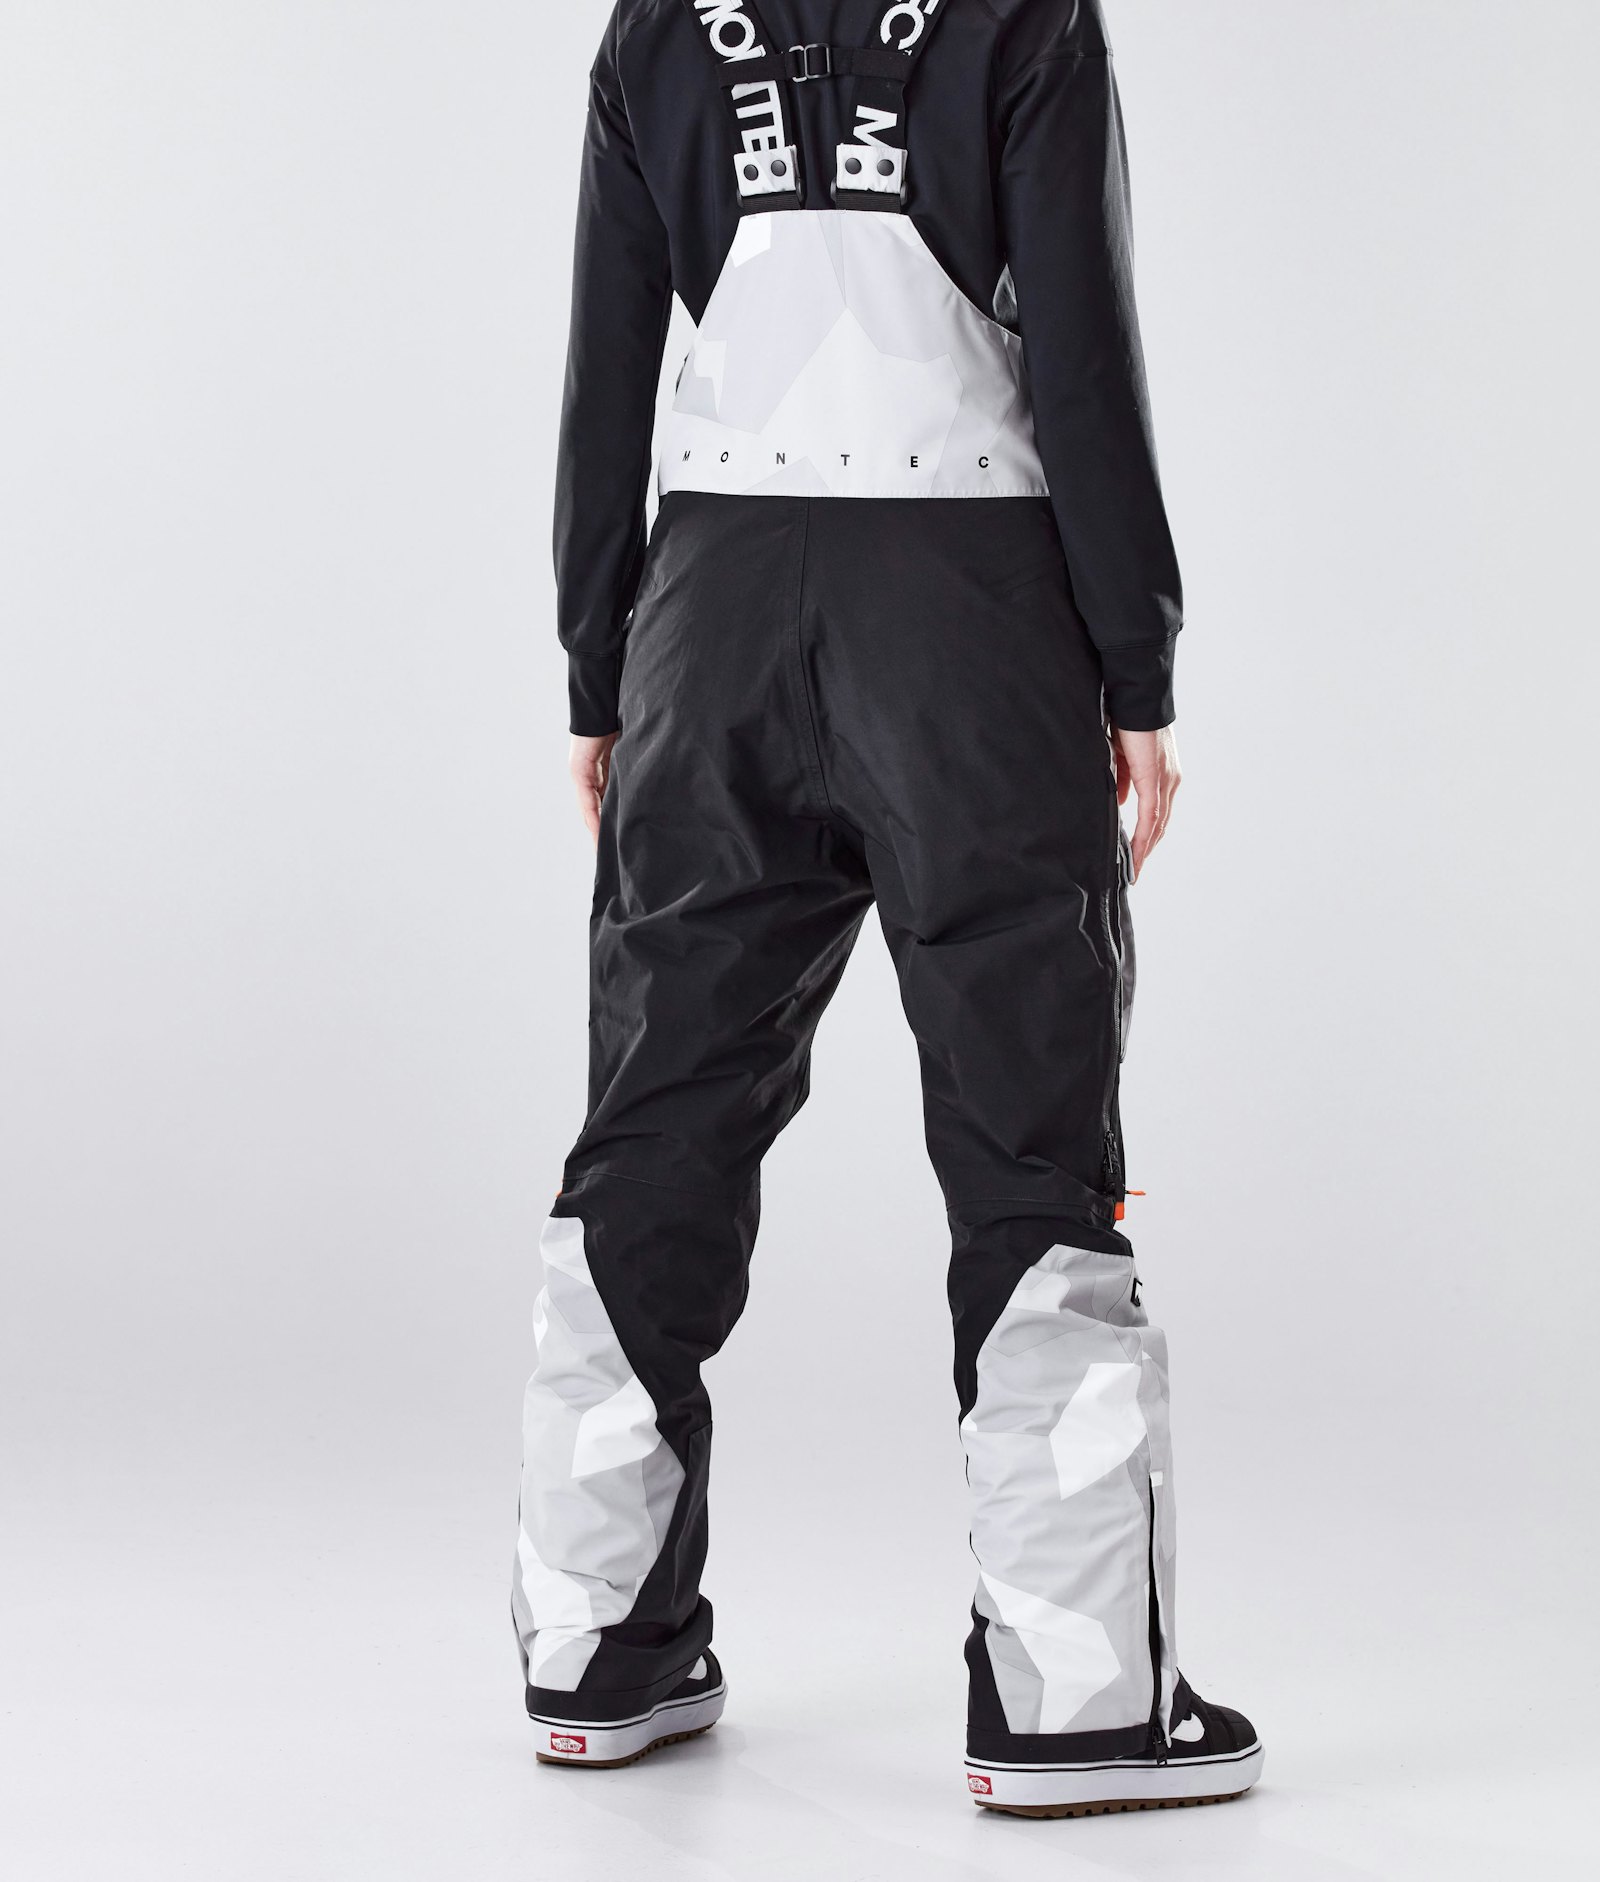 Montec Fawk W 2020 Pantalones Snowboard Mujer Snow Camo/Black